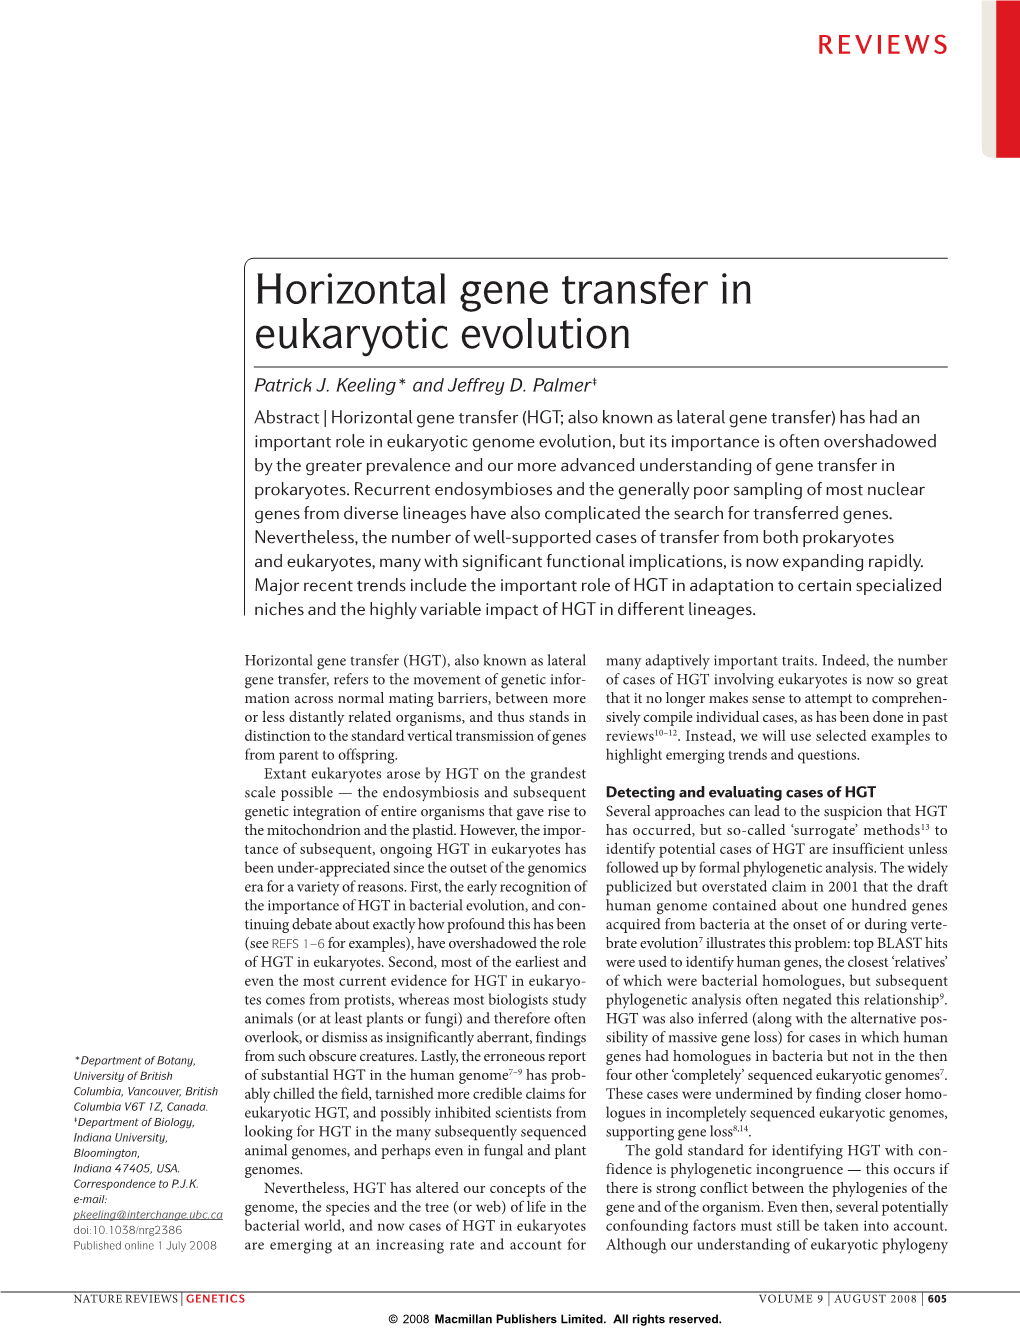 Horizontal Gene Transfer in Eukaryotic Evolution